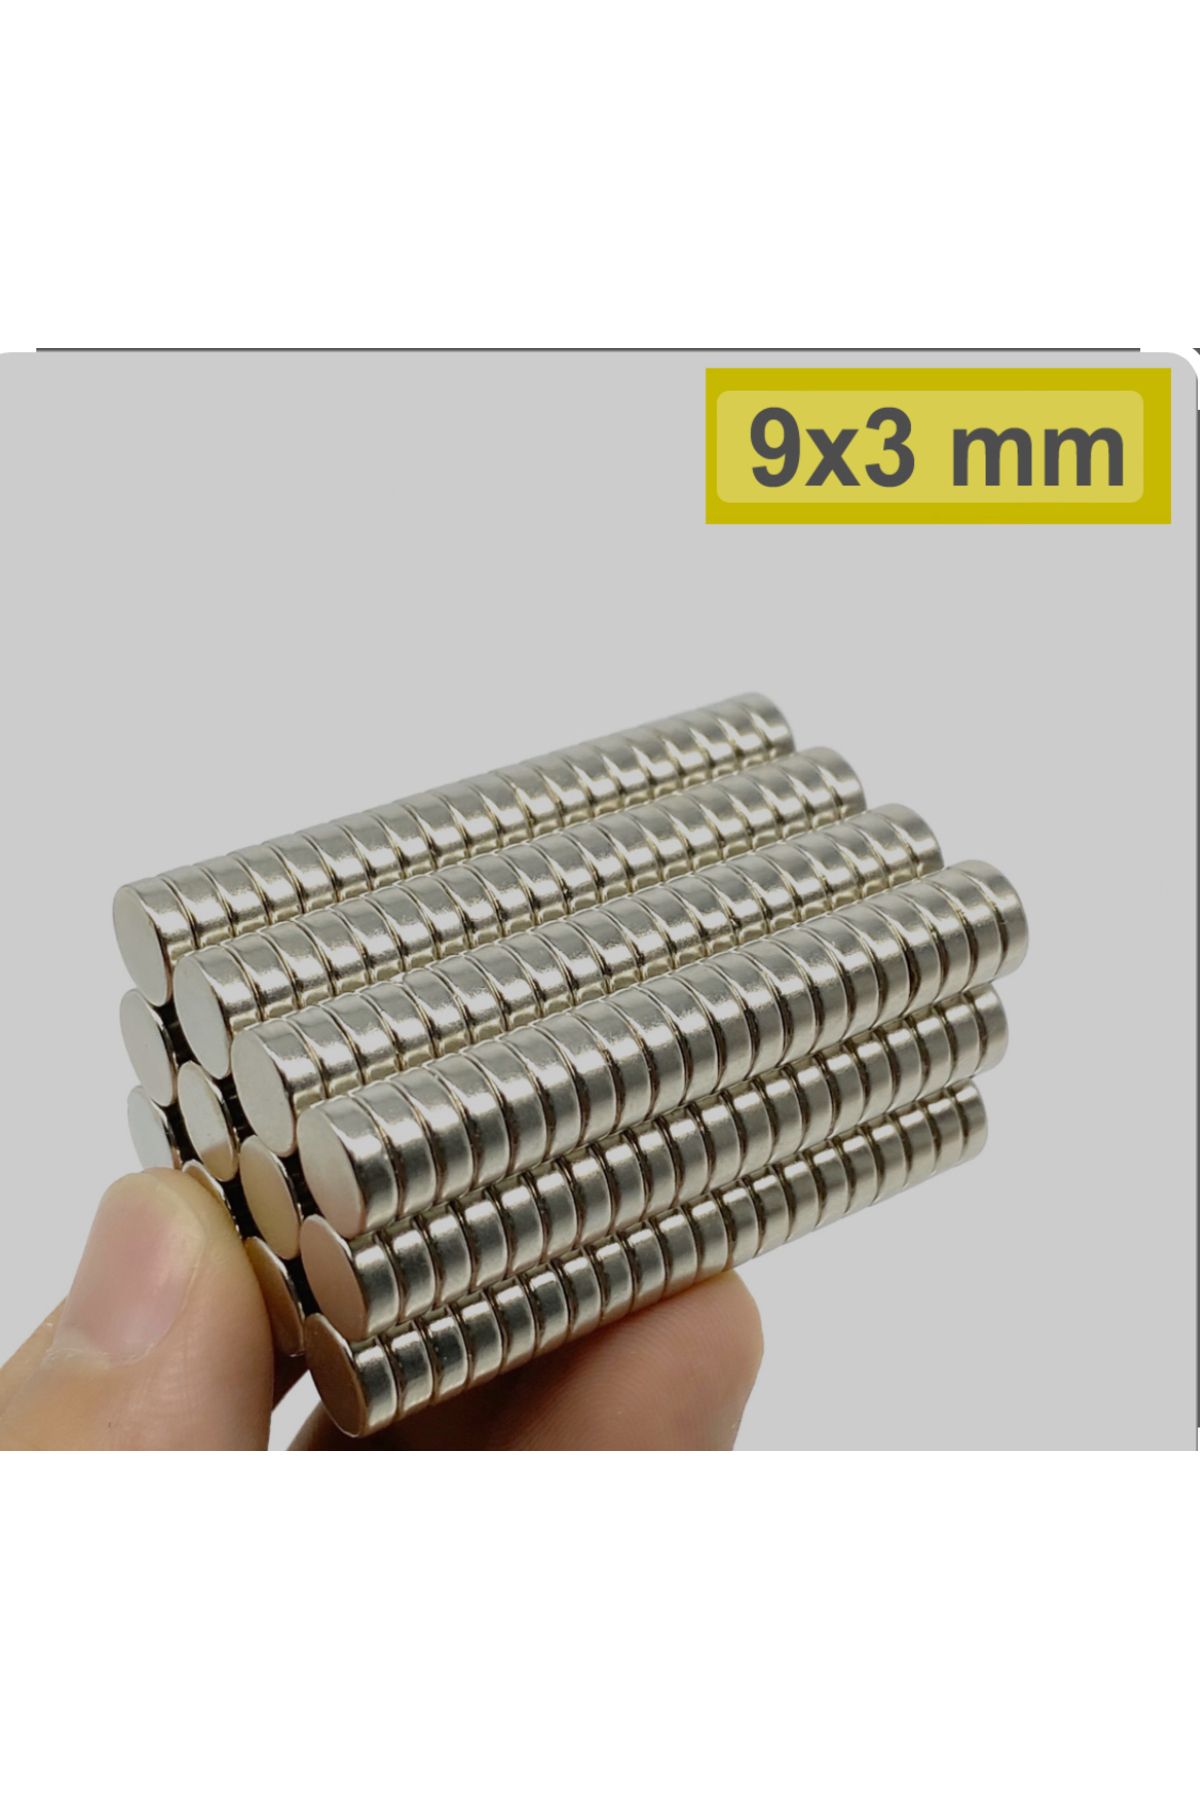 magnet market 100 Adet 9x3mm Çap 9mm X Kalınlık 3mm Neodymium Magnet